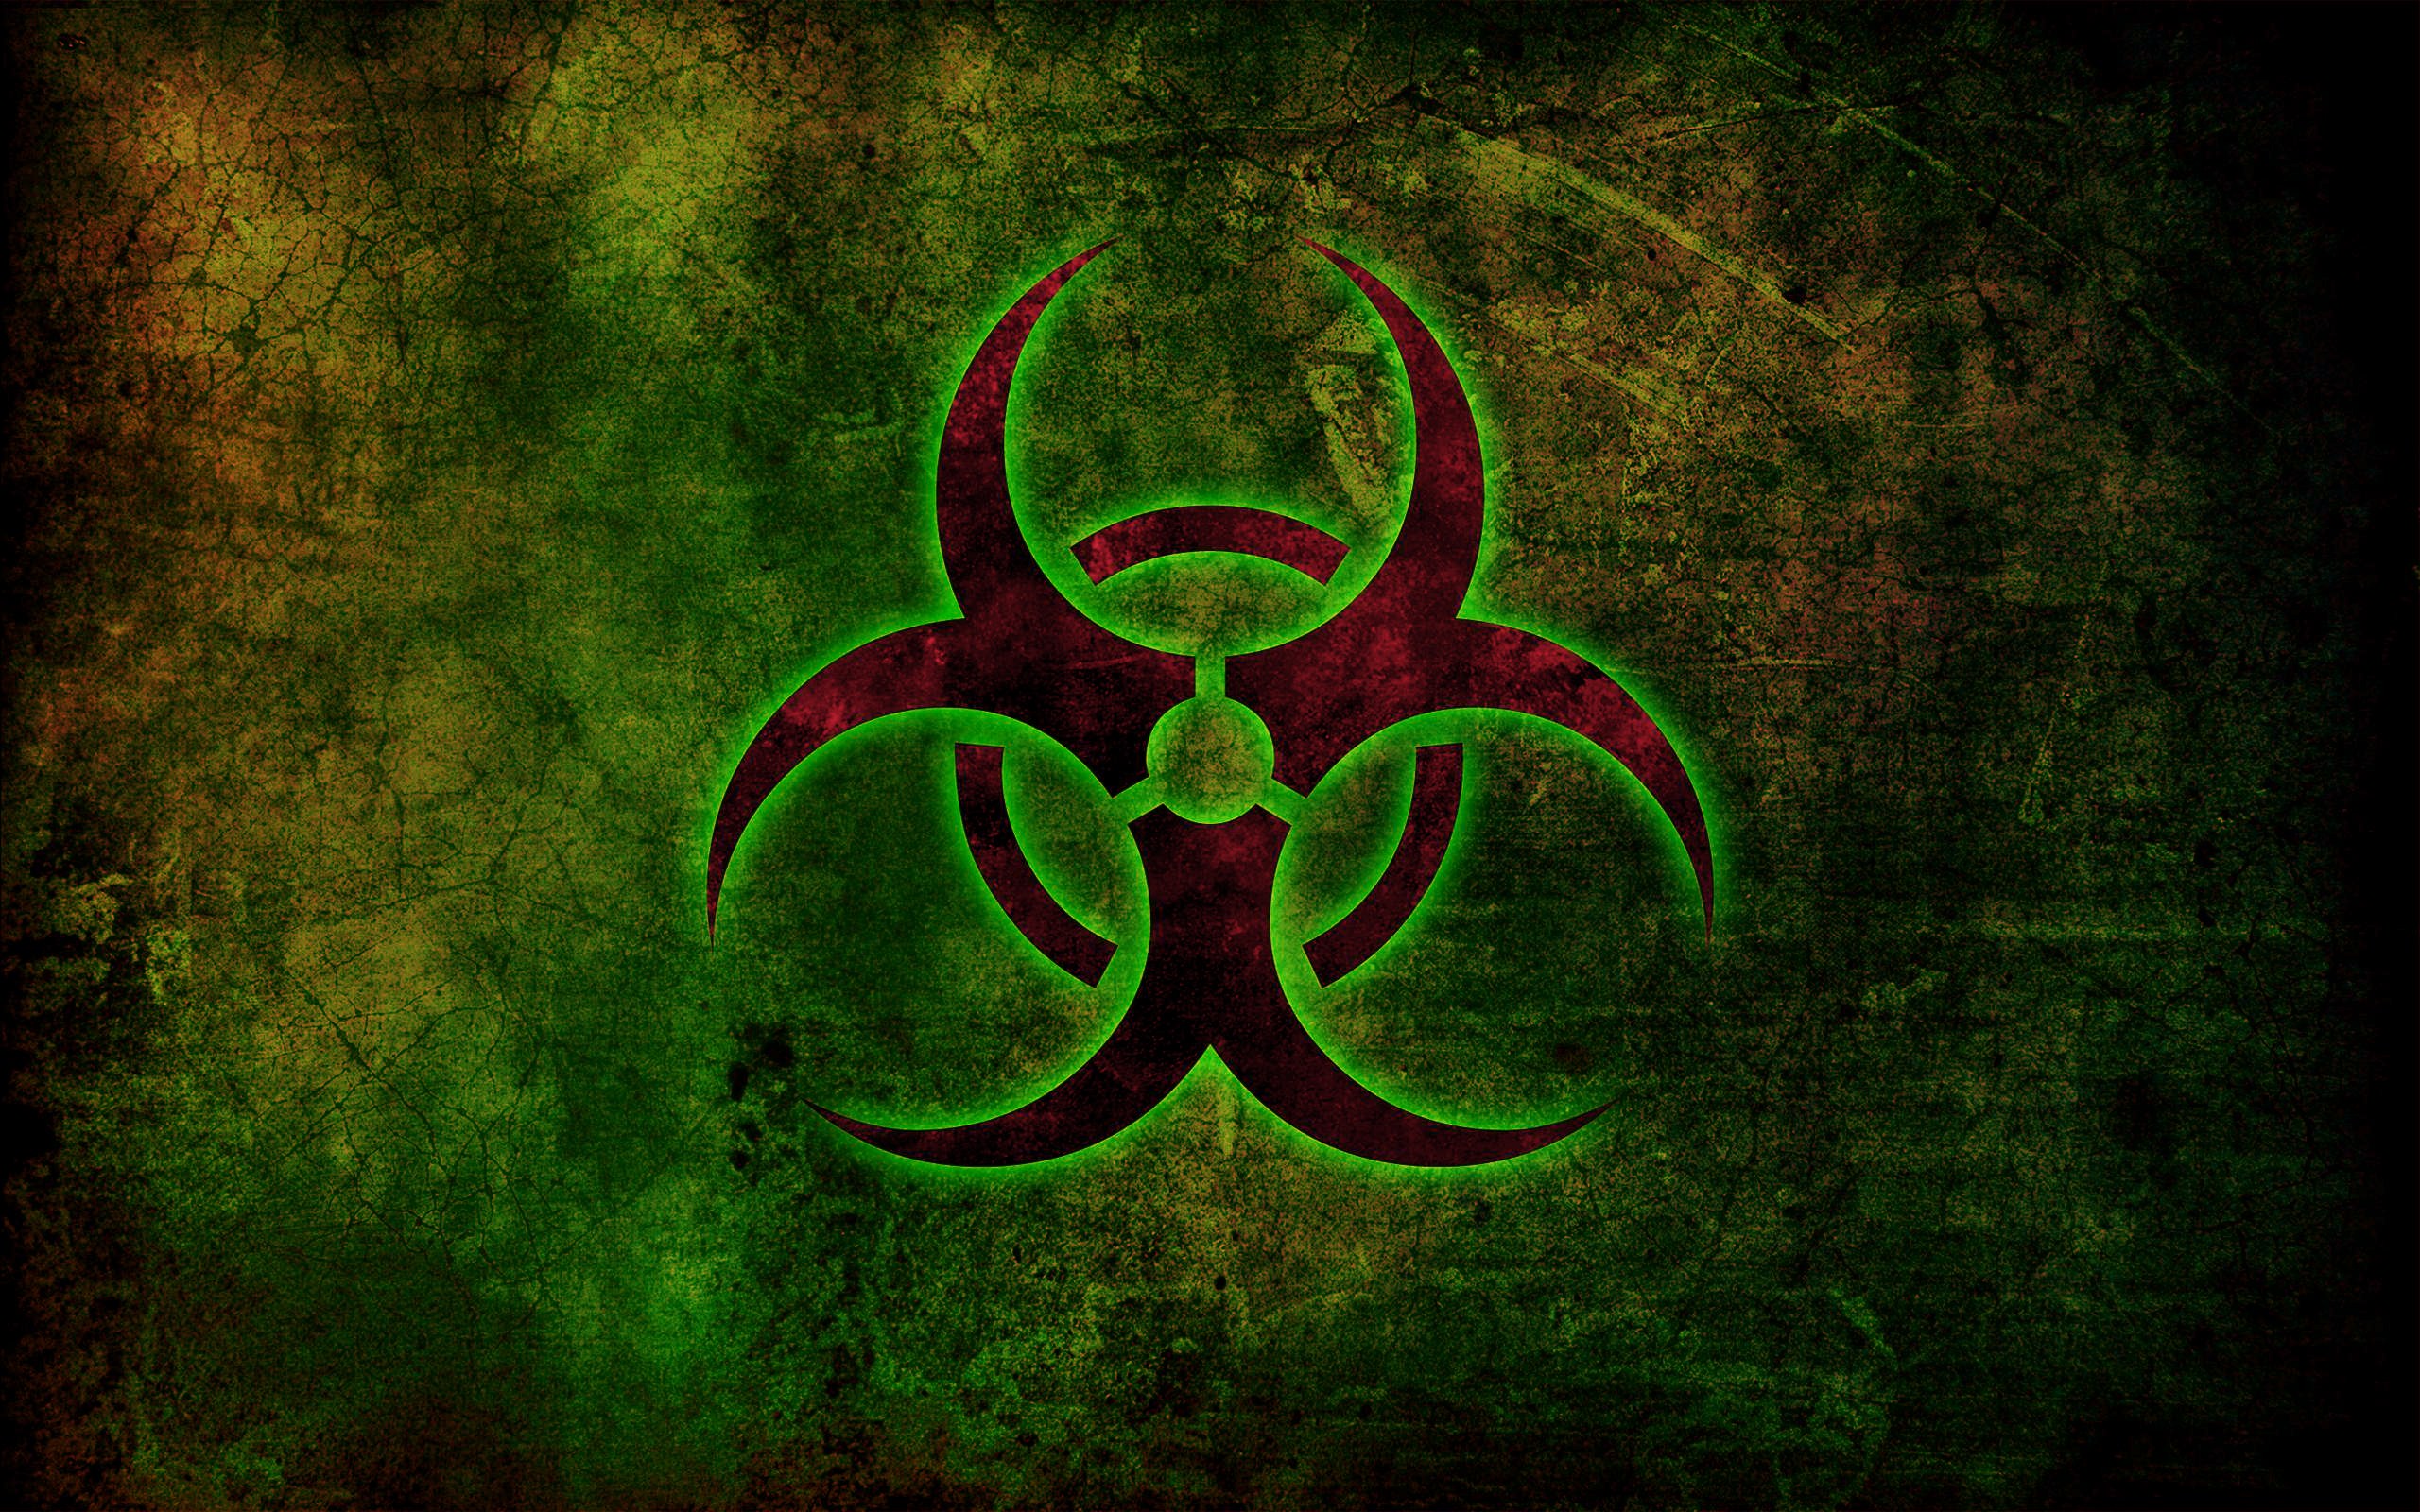 biohazard, grunge, symbols - desktop wallpaper